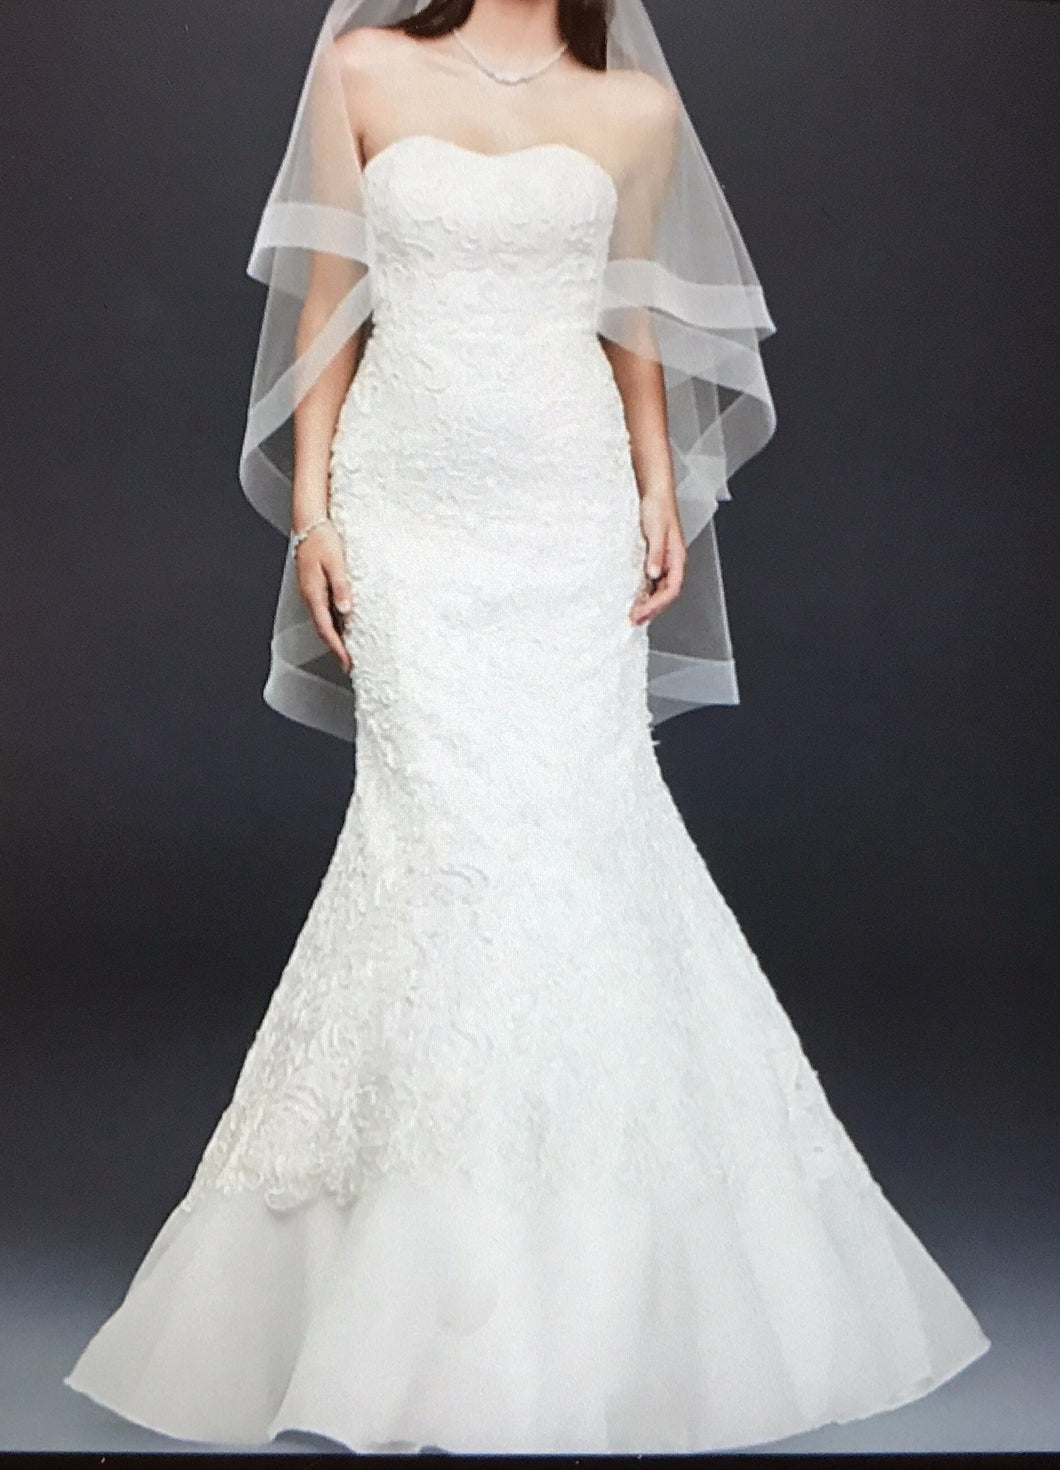 Oleg Cassini 'Elegant' size 10 new wedding dress front view on model